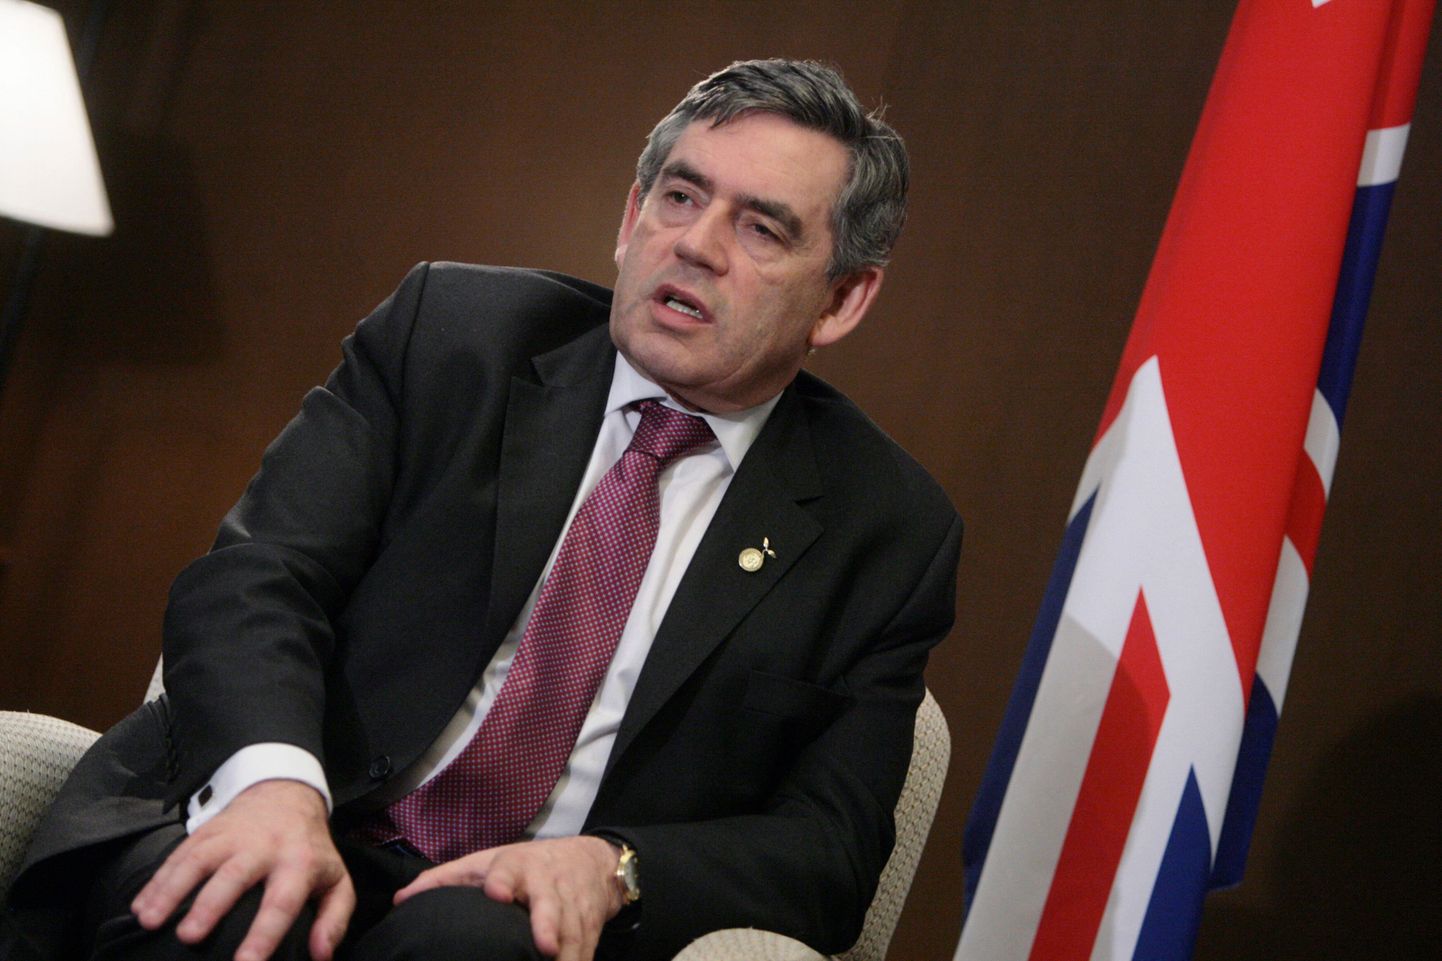 Briti peaminister Gordon Brown kohtus  esimest korda Venemaa uue presidendi Dmitri Medvedeviga.